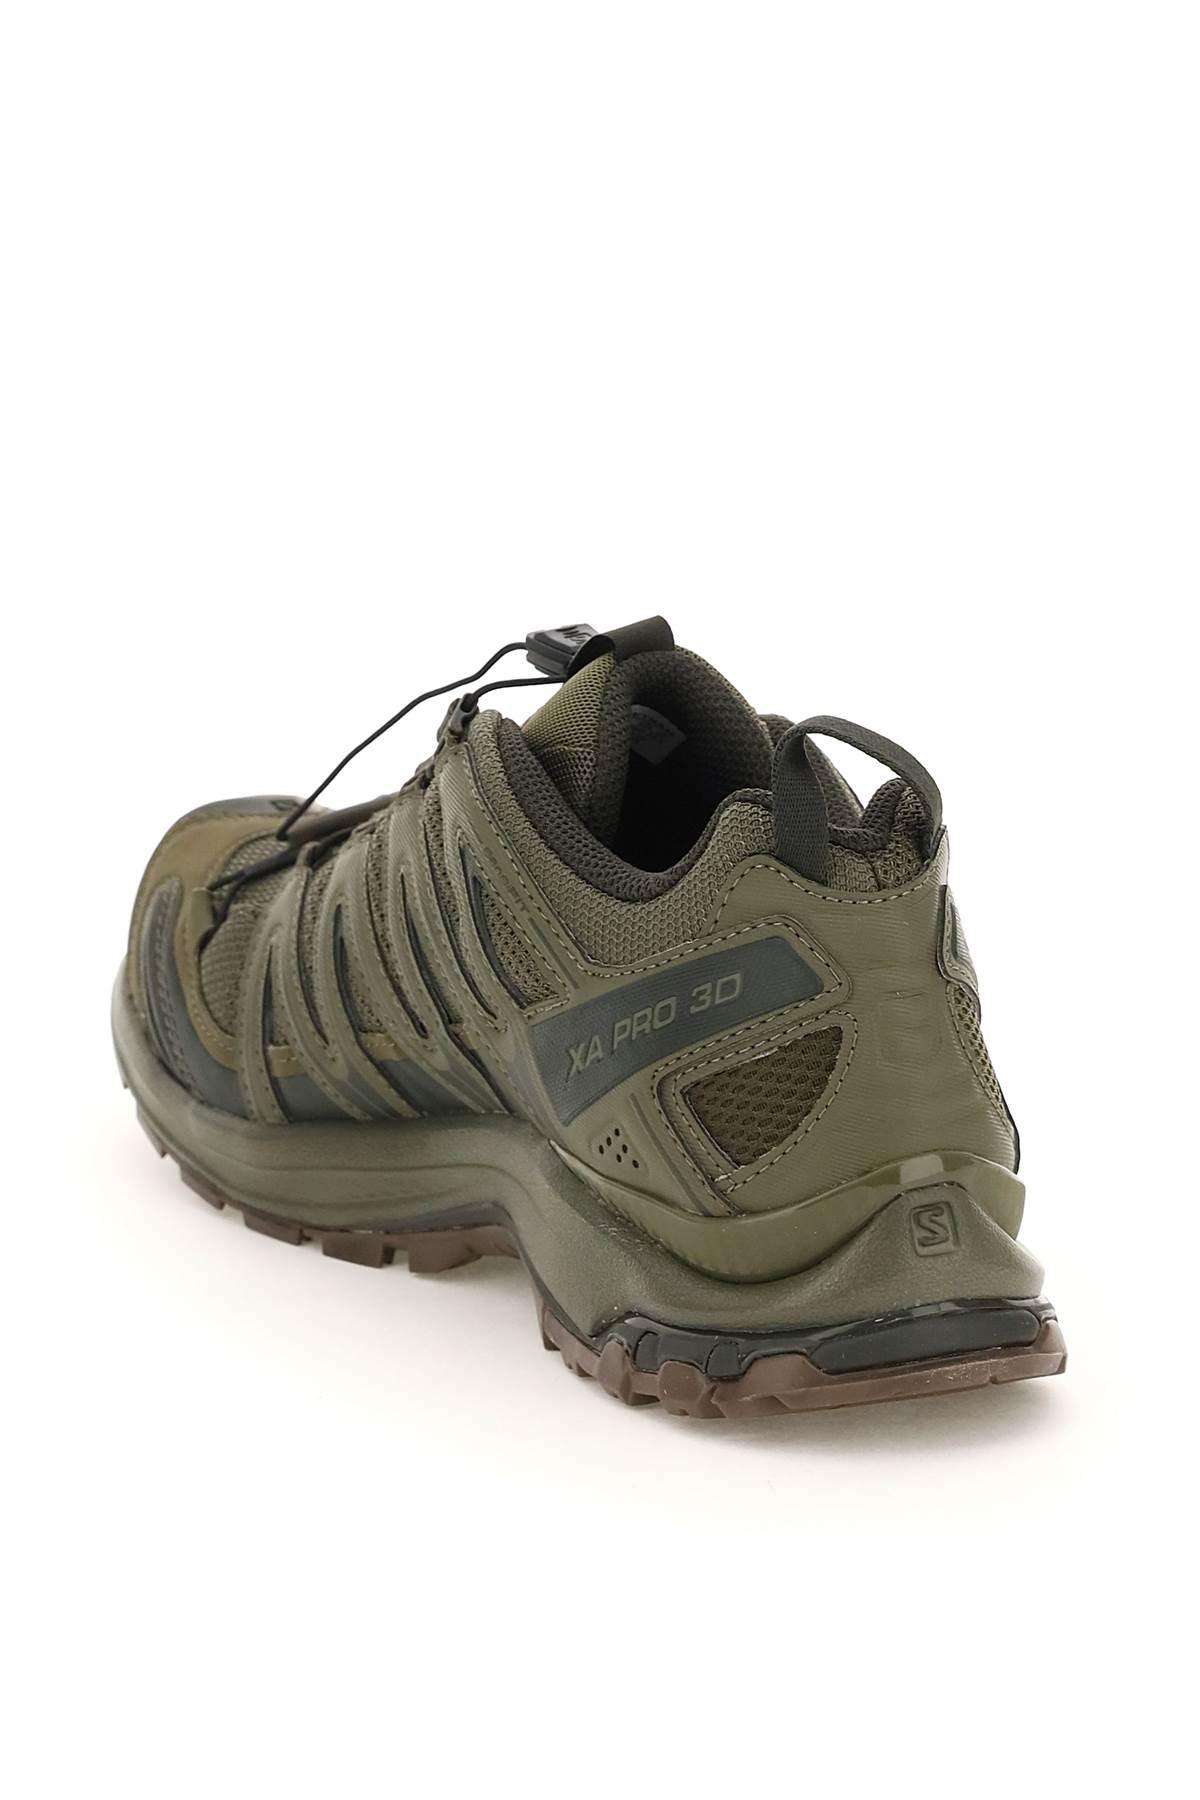 Salomon Xa Pro 3d Trail Running Shoes | Lyst